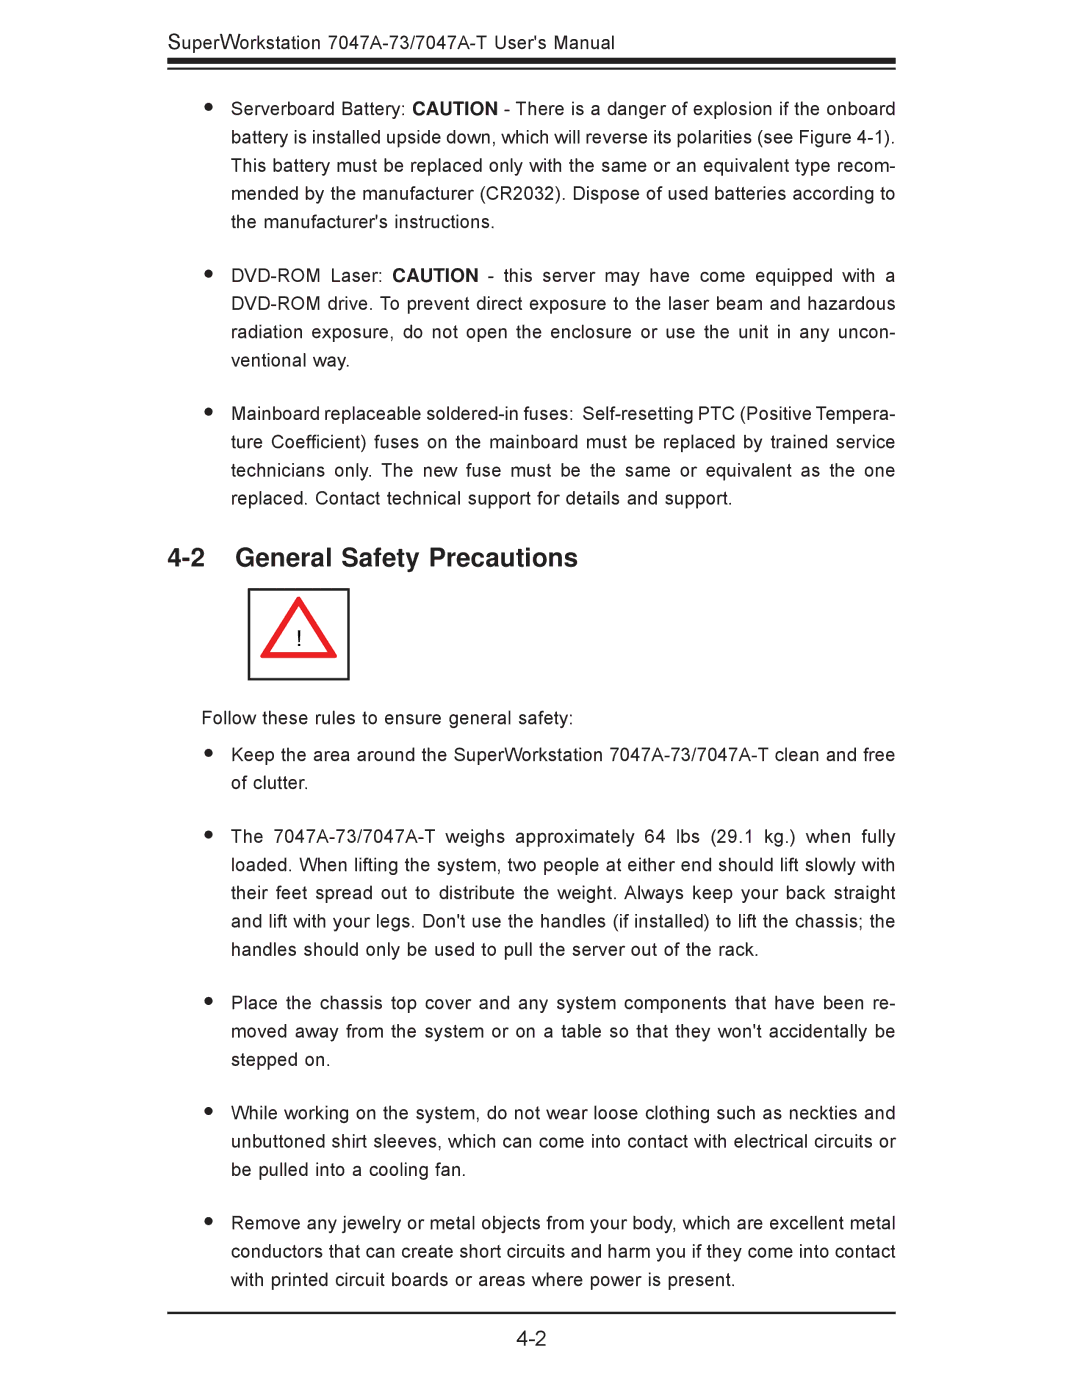 SUPER MICRO Computer 7047A-T, 7047A-73 user manual General Safety Precautions 